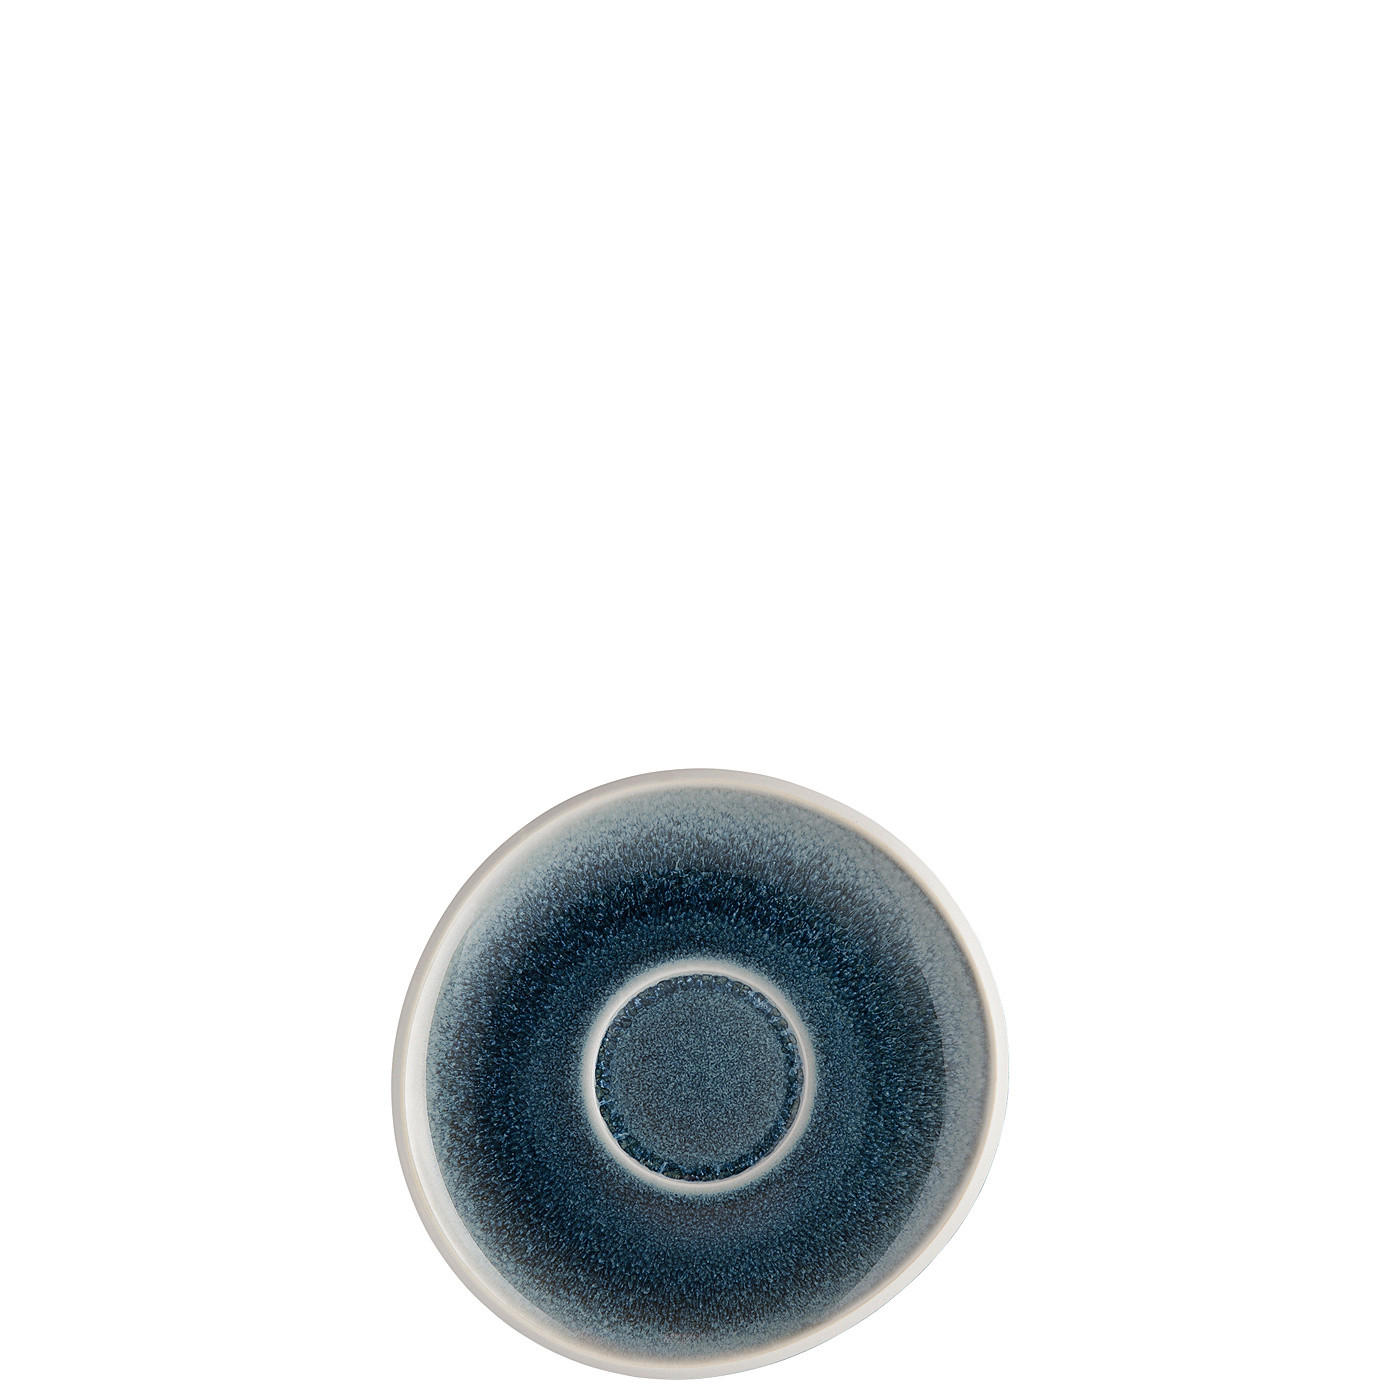 UNTERTASSE - Blau, LIFESTYLE, Keramik (15,5/15/2,2cm) - Rosenthal